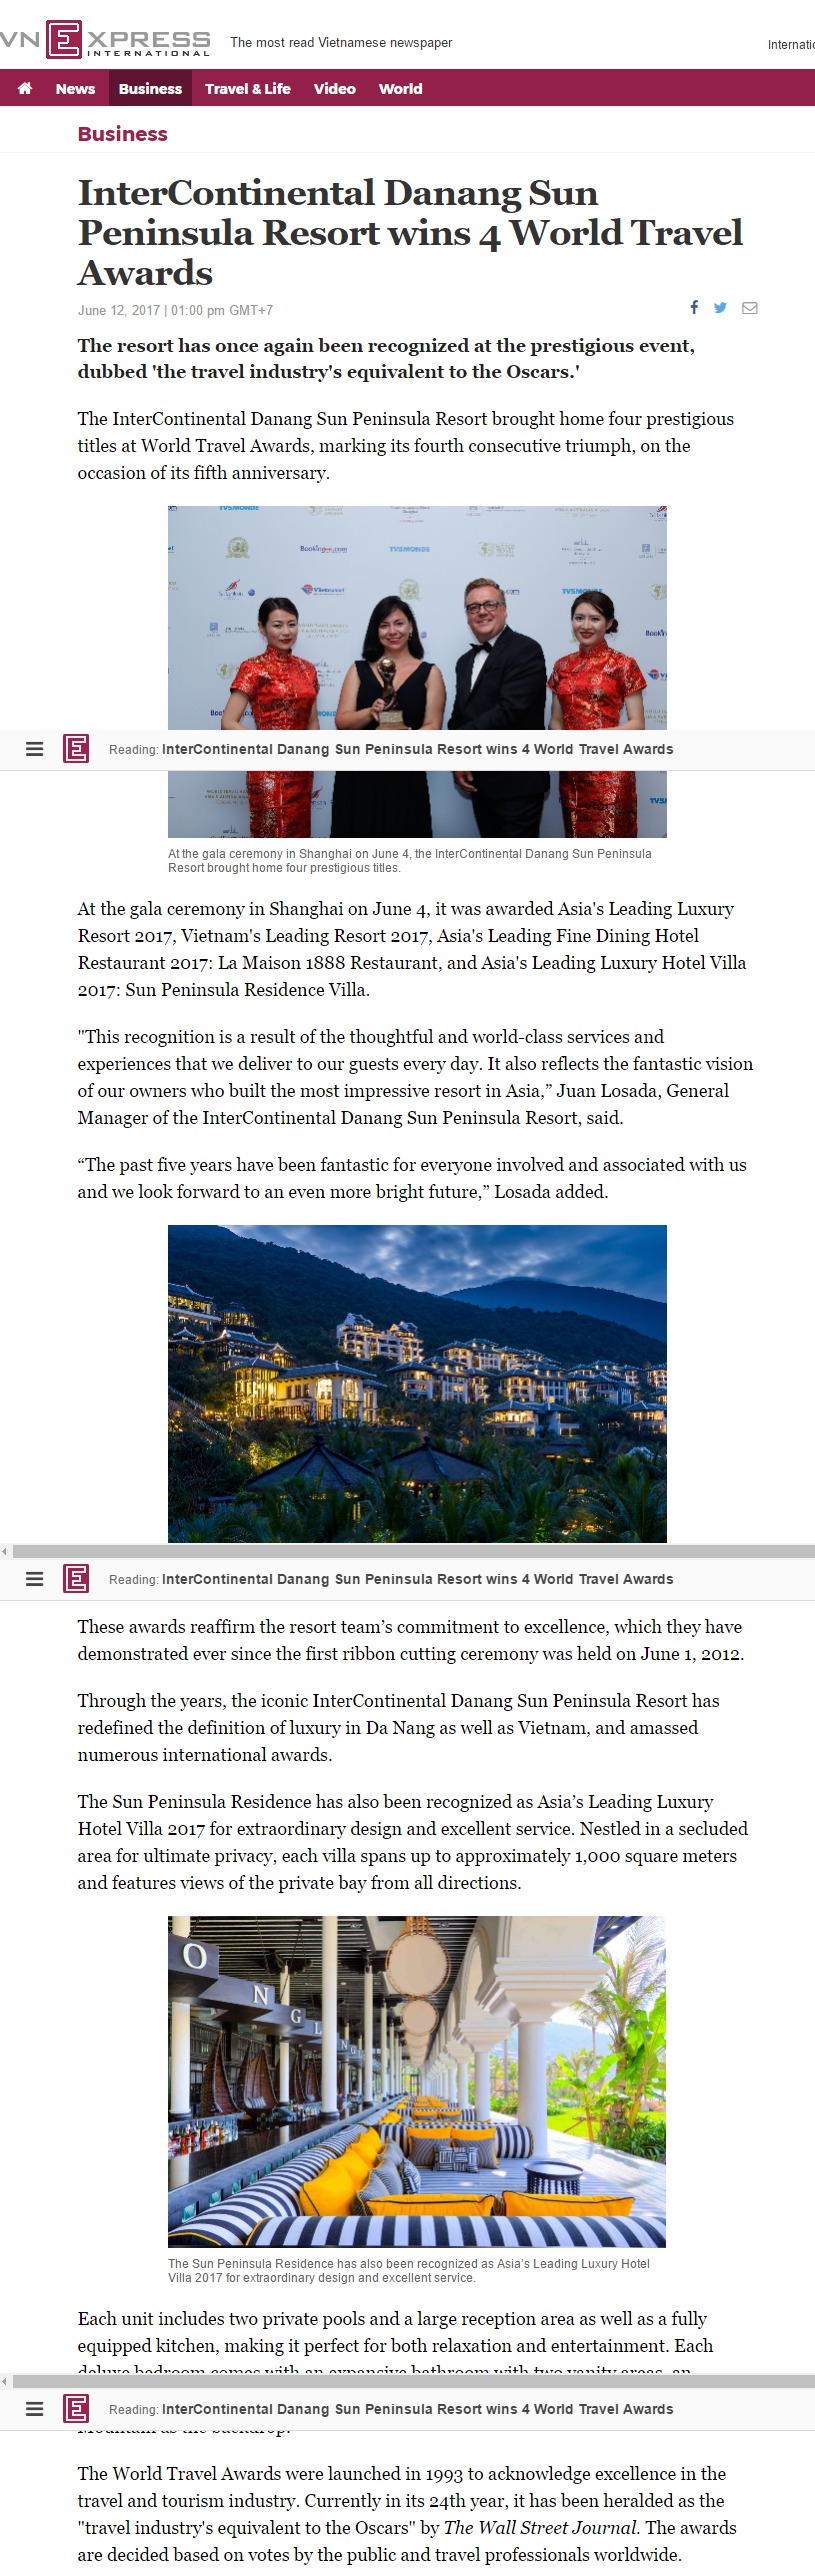 InterContinental Danang Sun Peninsula Resort wins 4 World Travel Awards